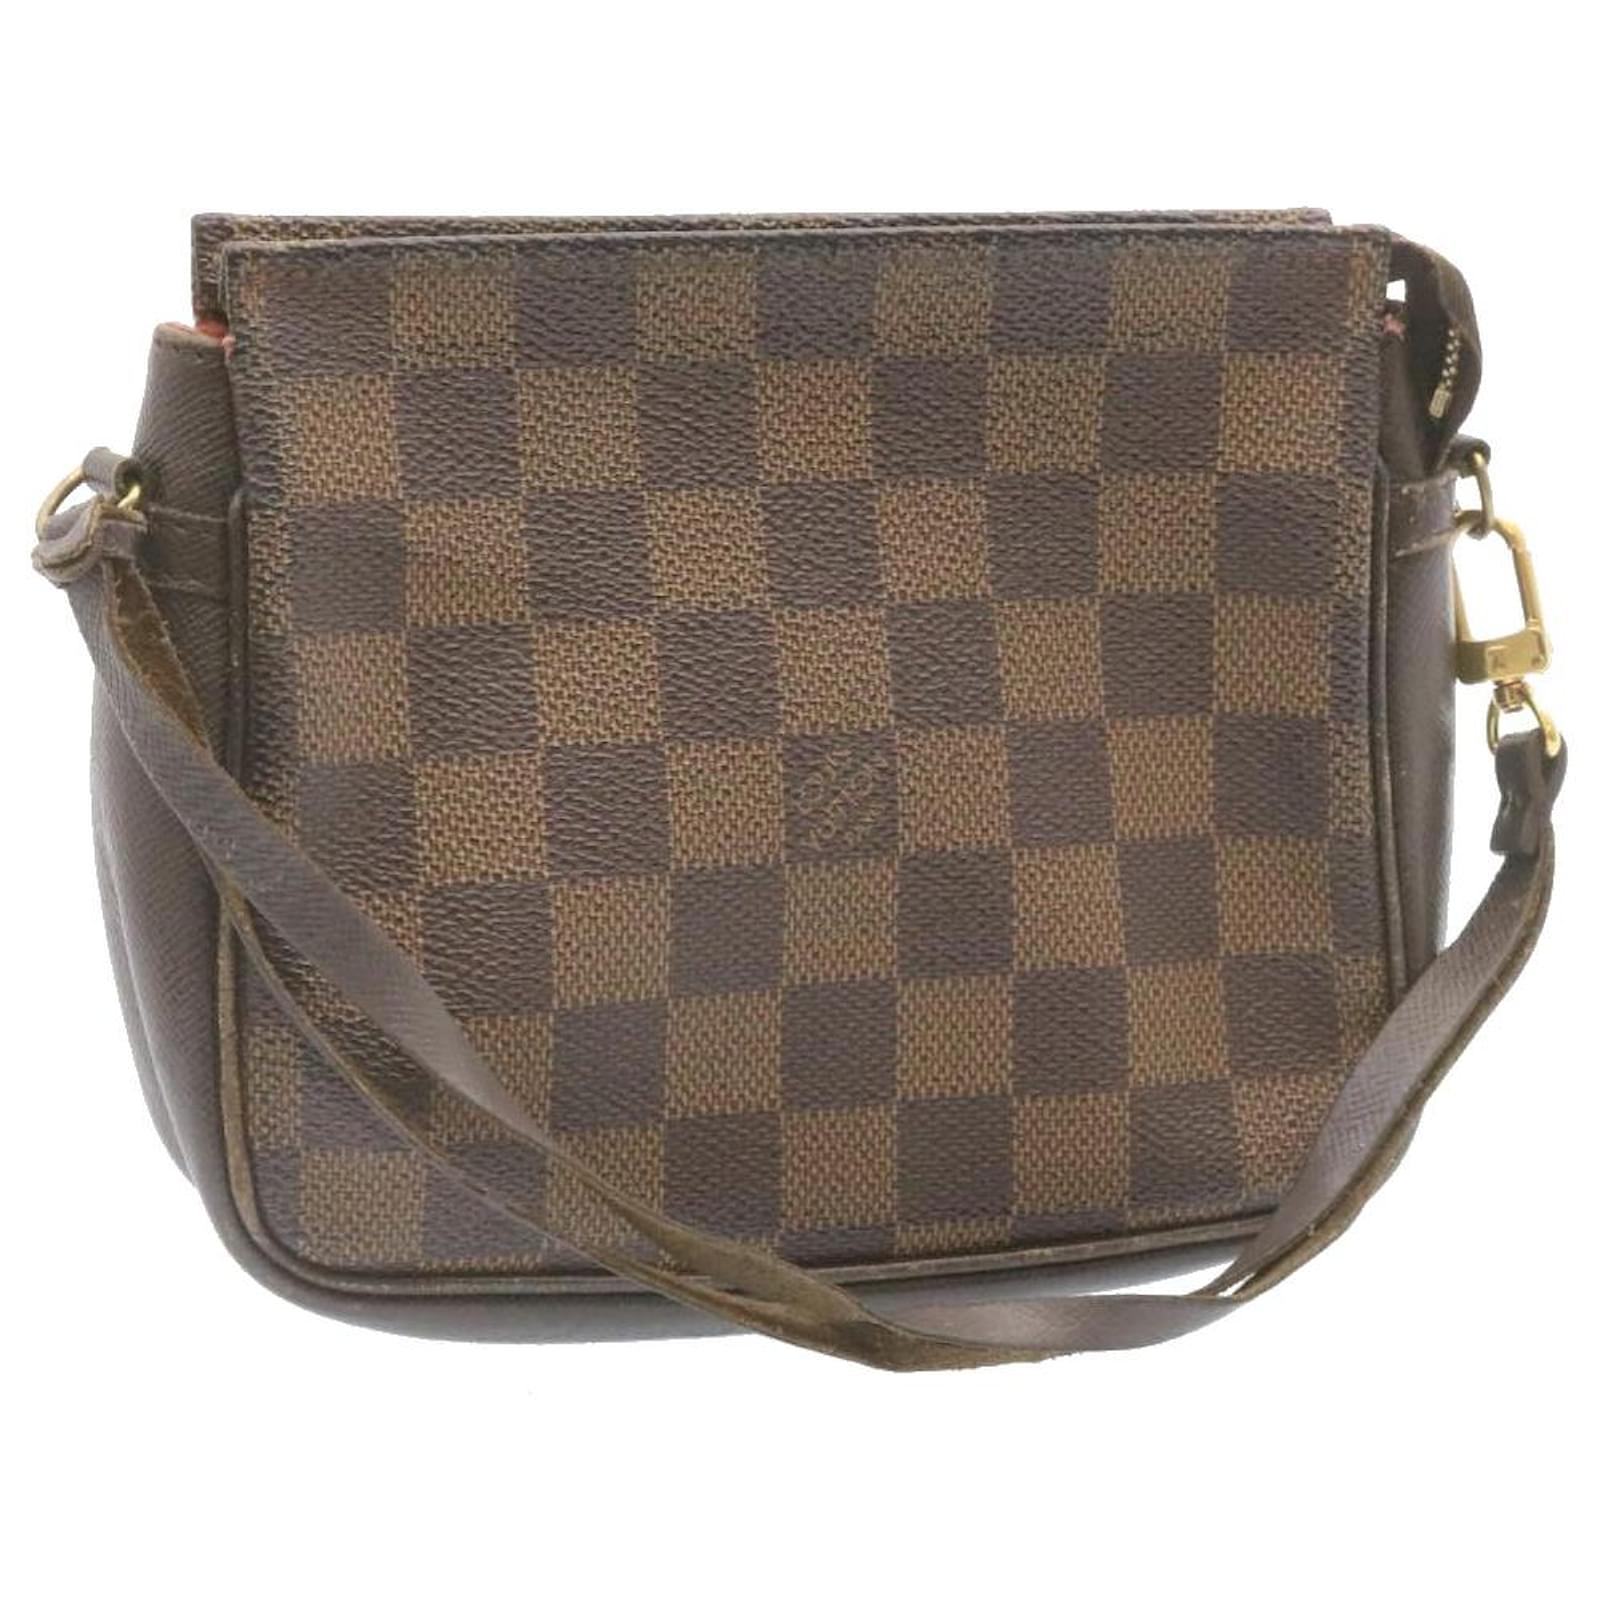 Louis Vuitton Damier Ebene Pouch - Brown Clutches, Handbags